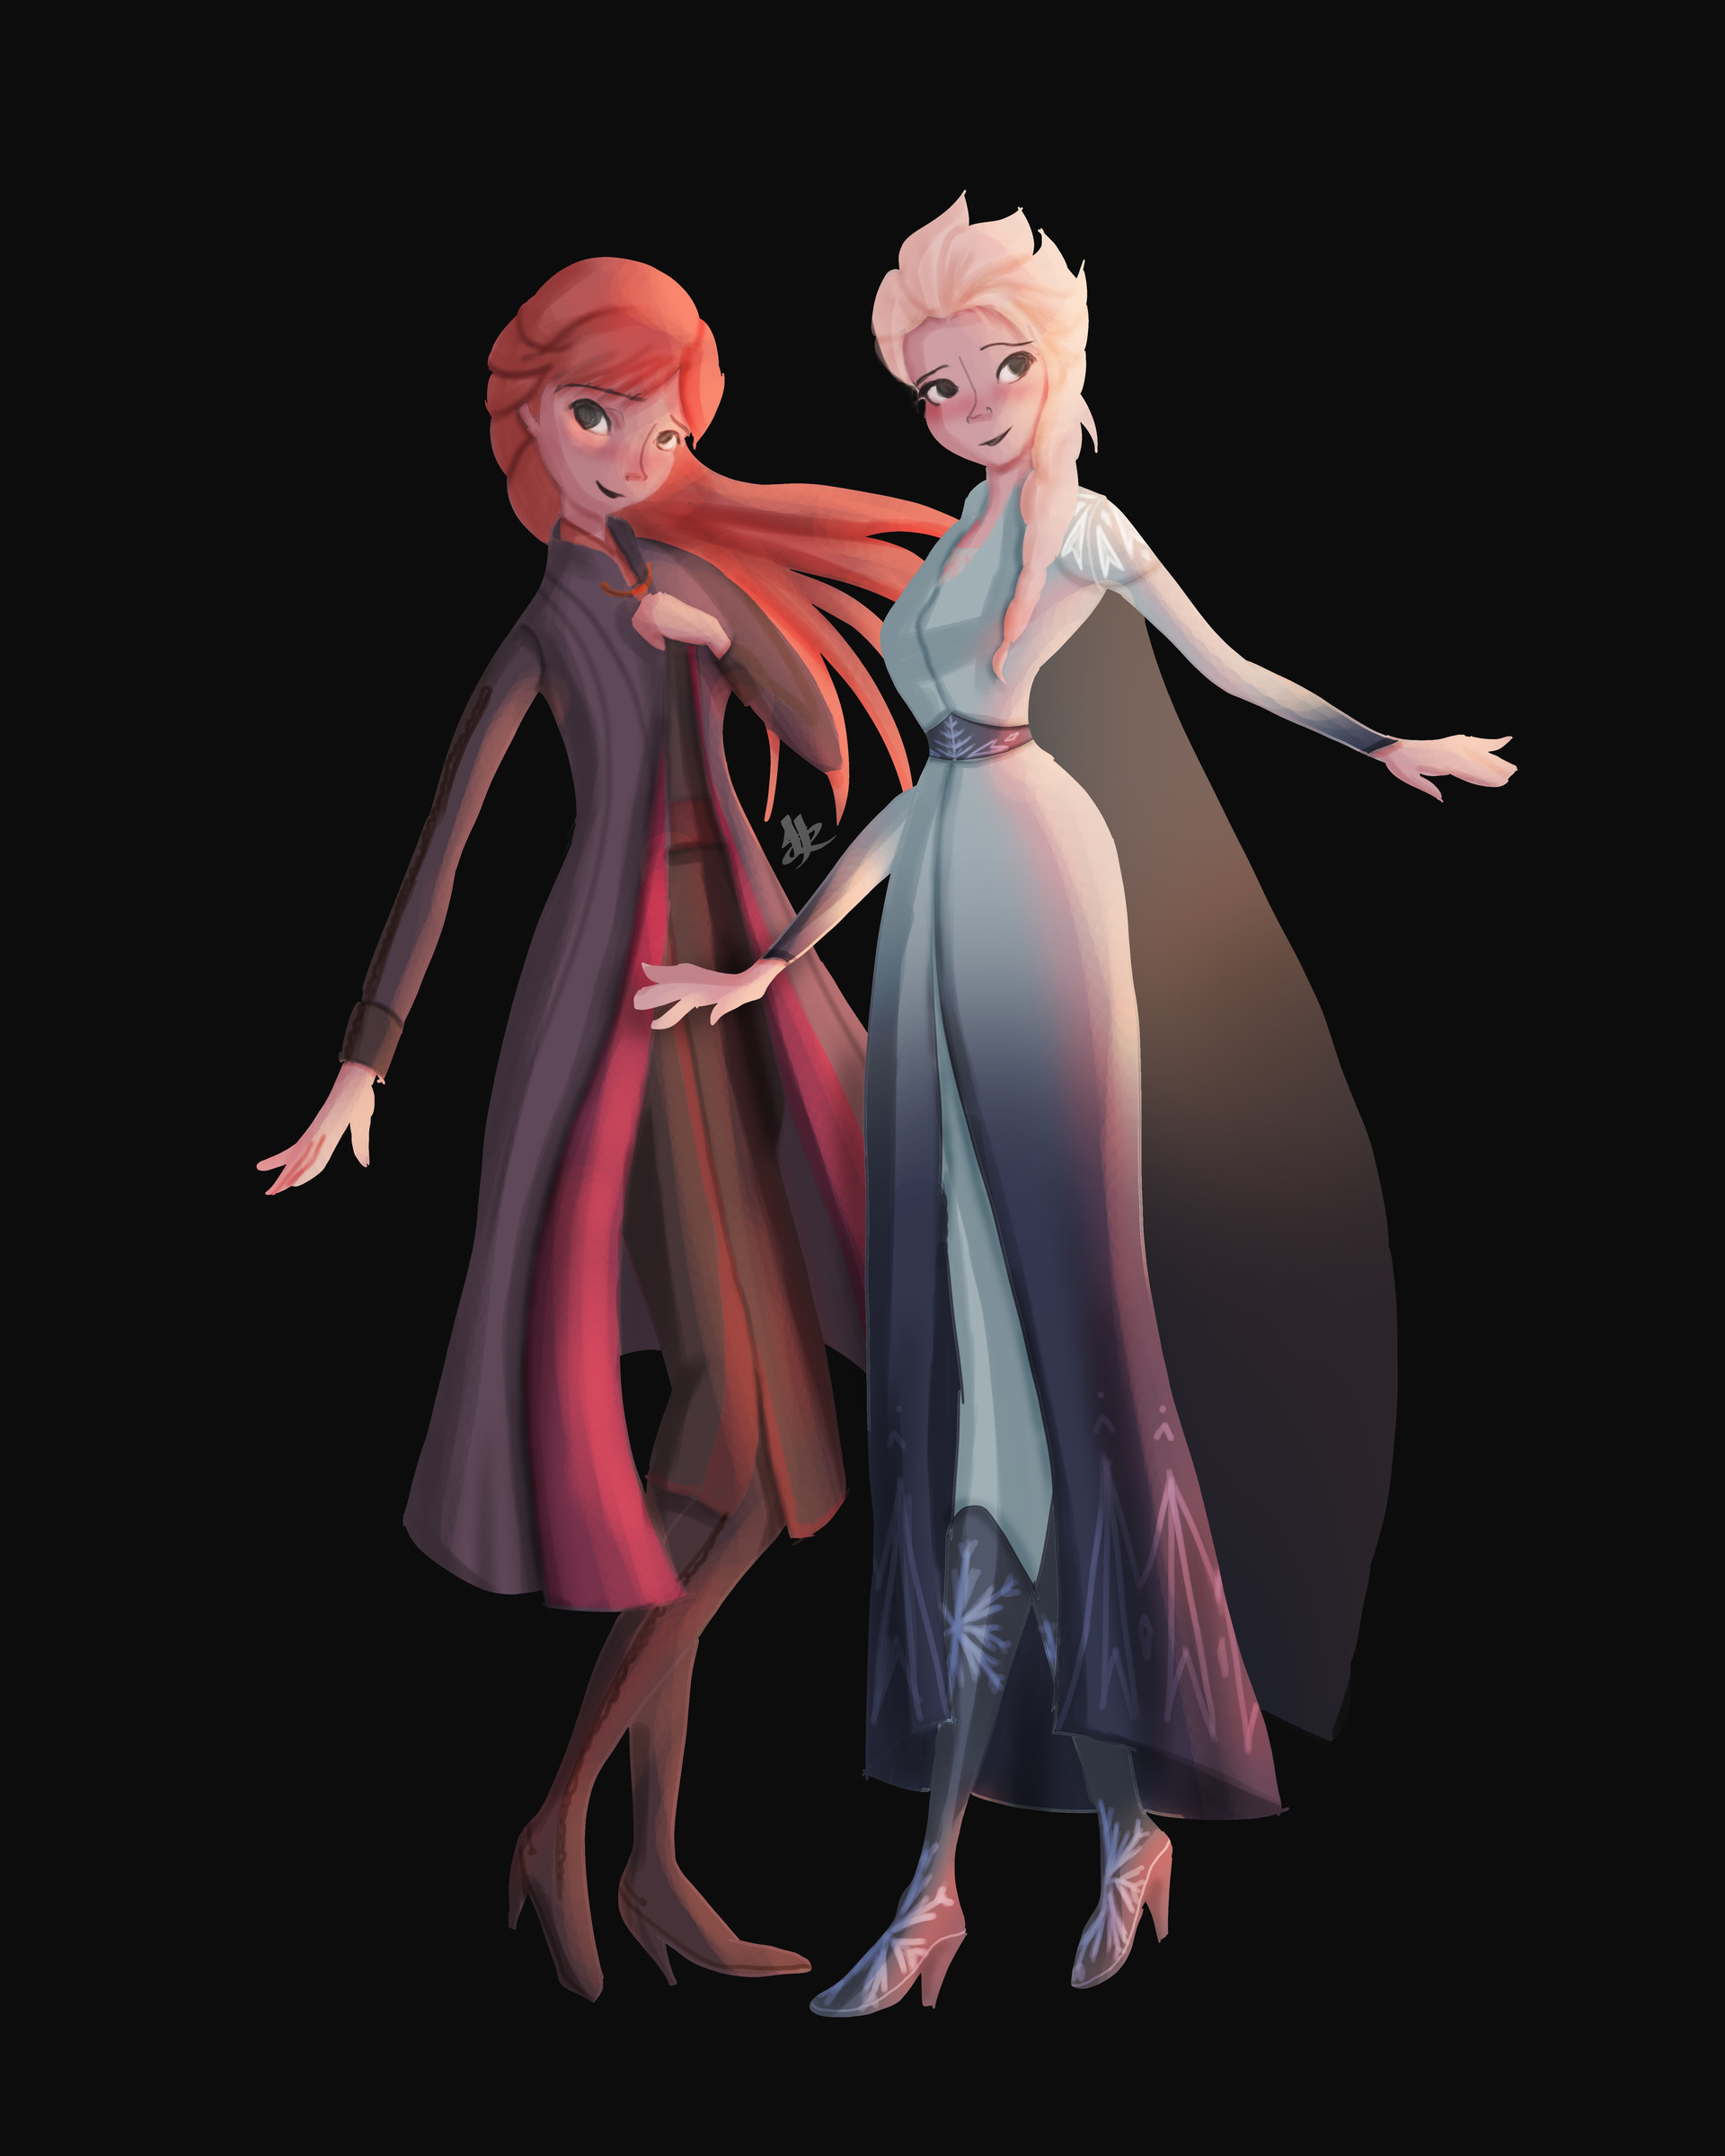 ArtStation - Frozen 2 character concept Elsa and Anna